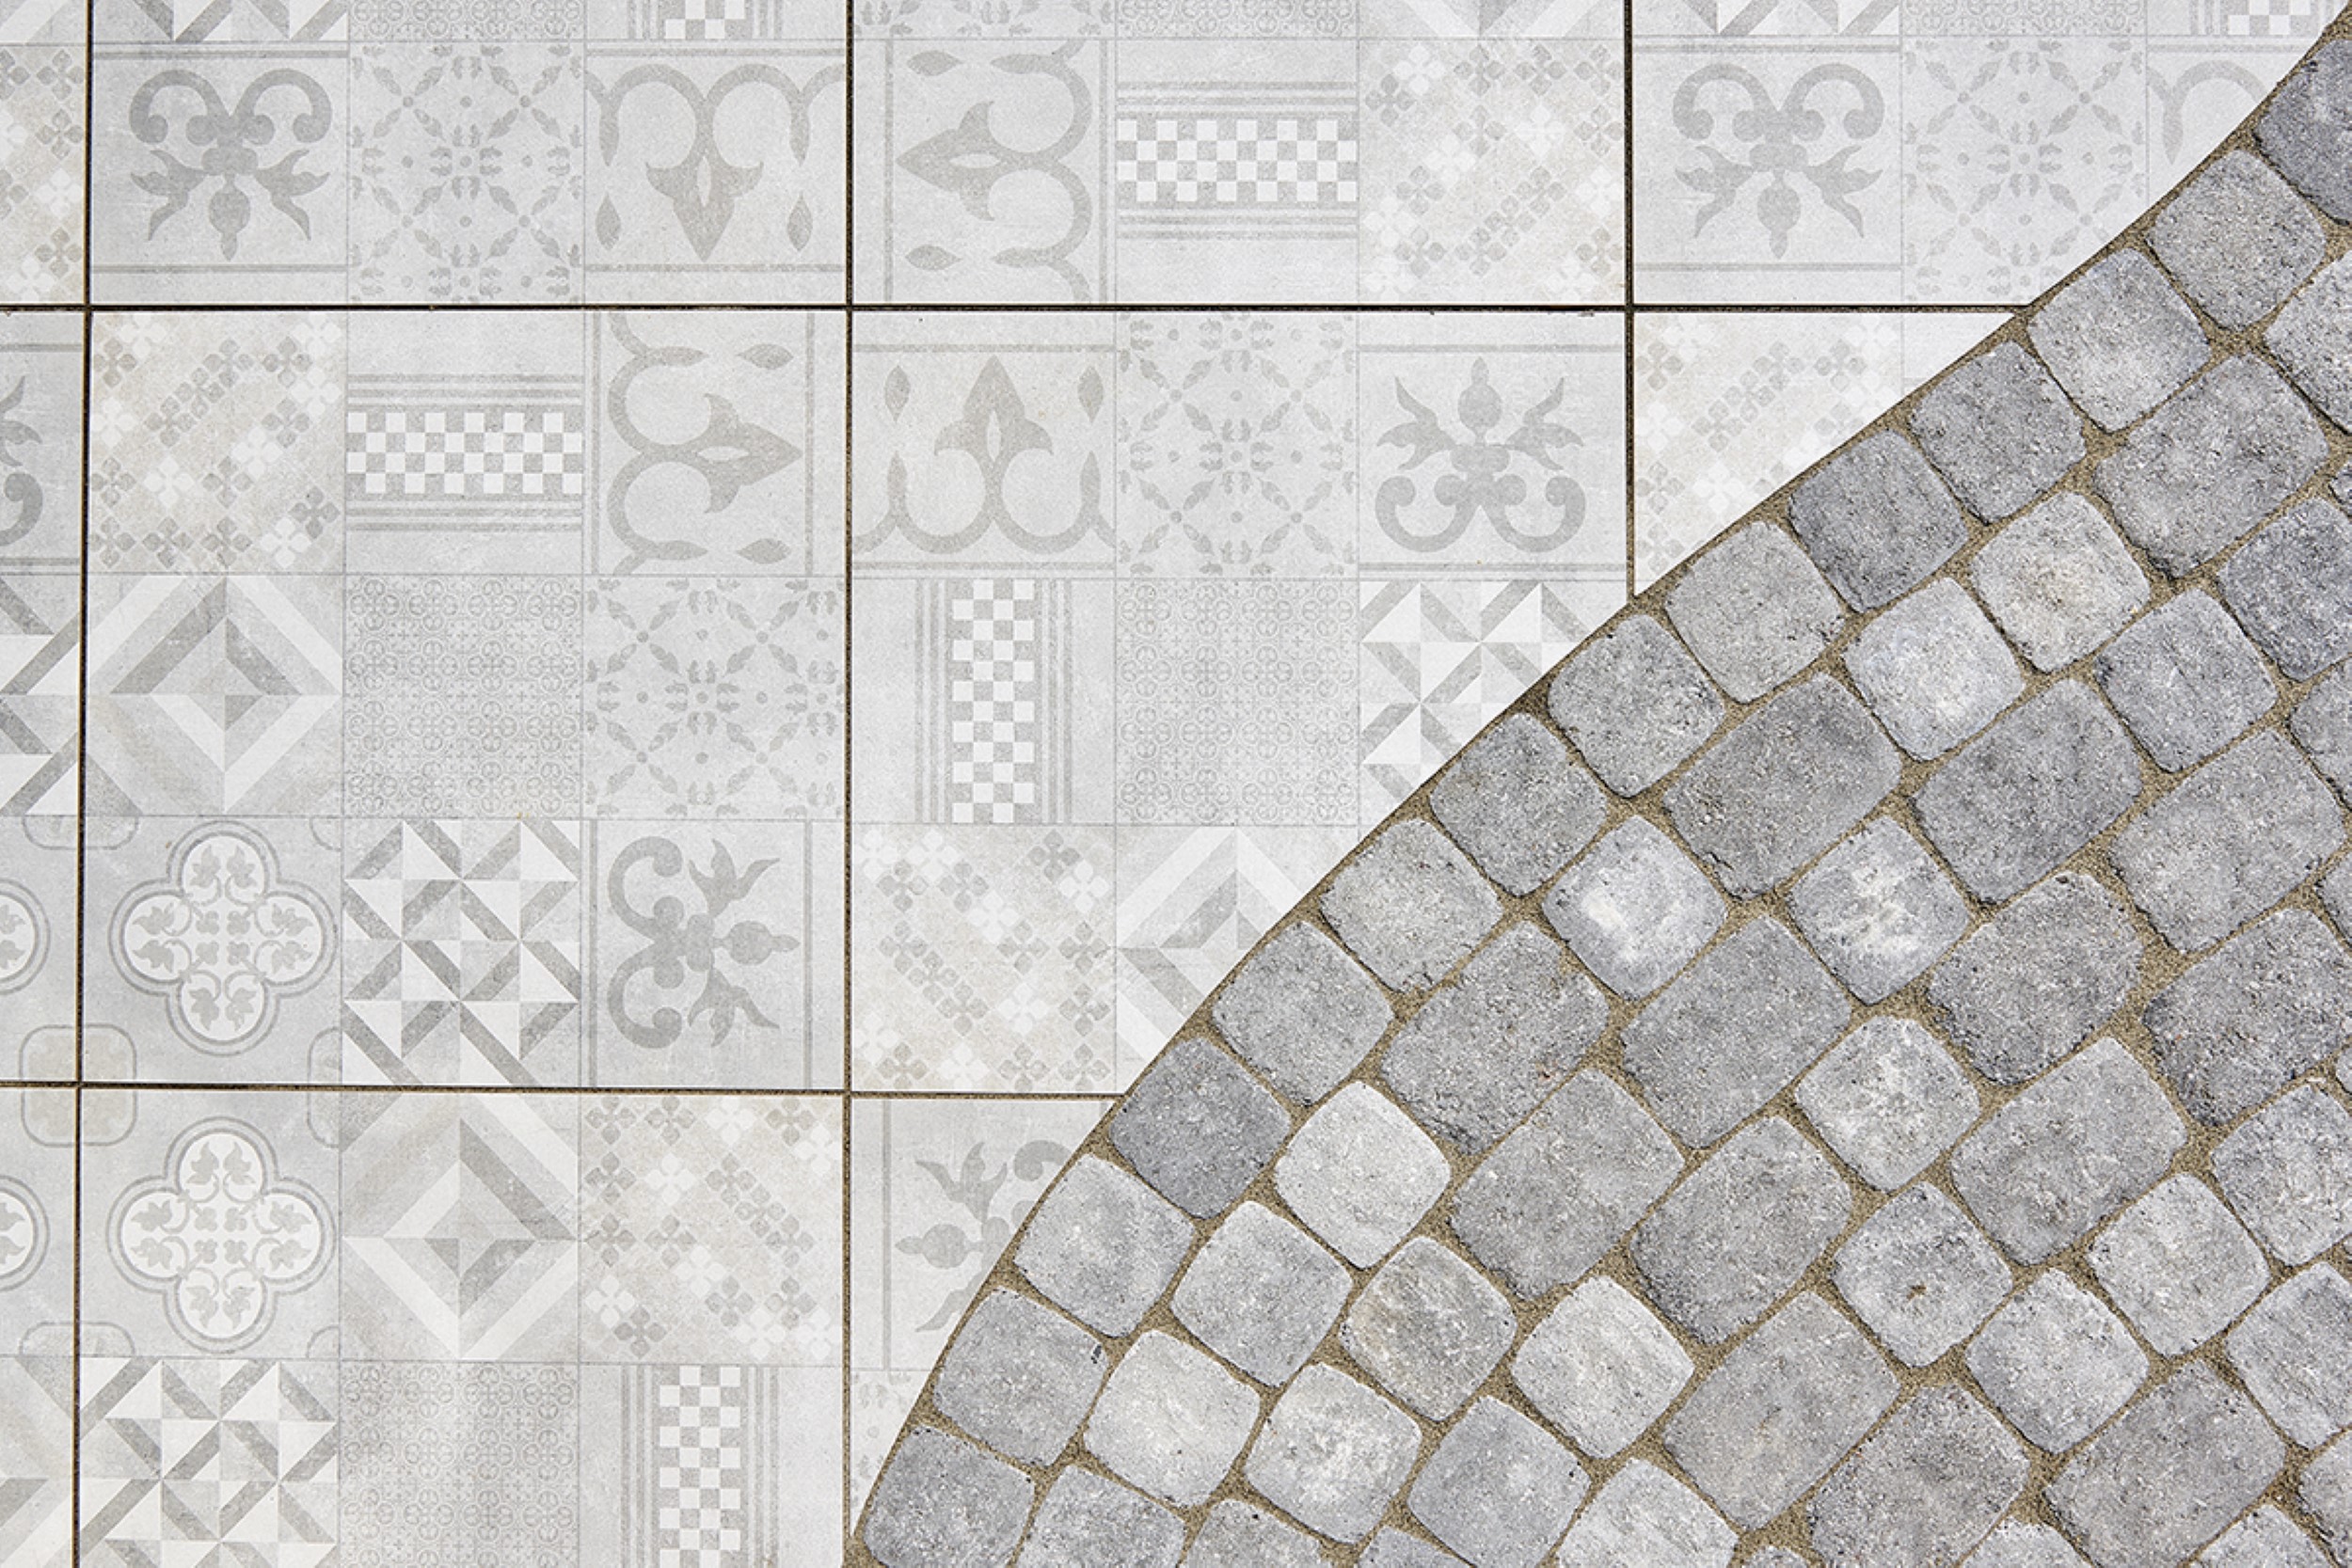 Mosaic Decorative Porcelain | Brett Aura Blocks | Cobbled pavers | Grey Paving | paving setts | square paving blocks | porcelain paving | mosaic porcelain | mosaic tiles | outdoor mosaic tiles | outdoor tiles